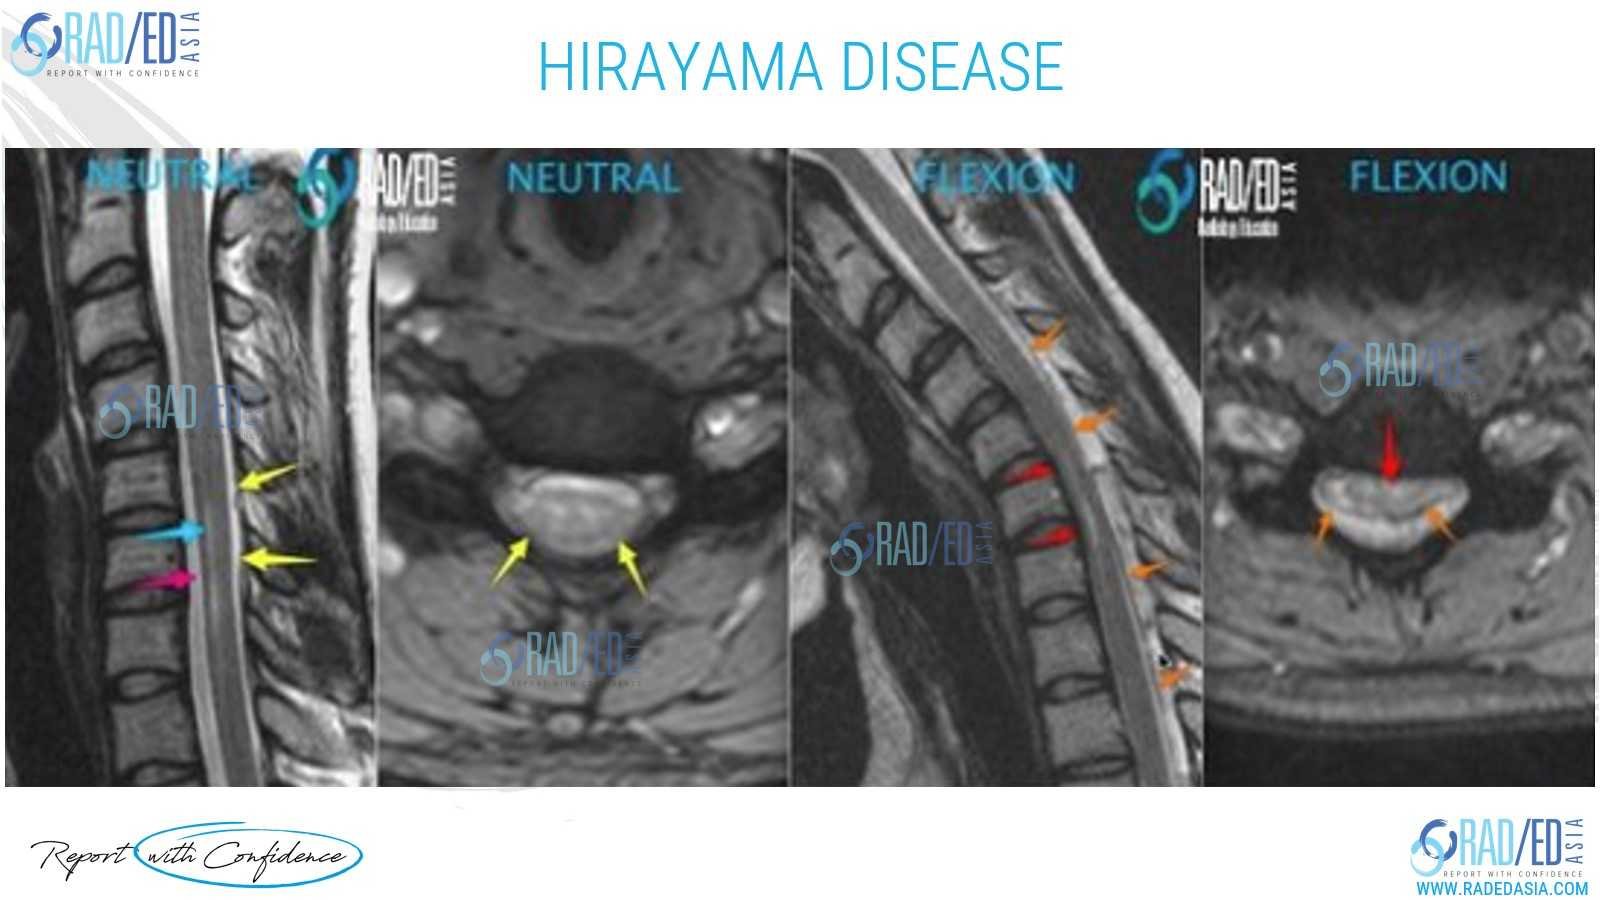 hirayama disease mri spine mri online radiology course radedasia